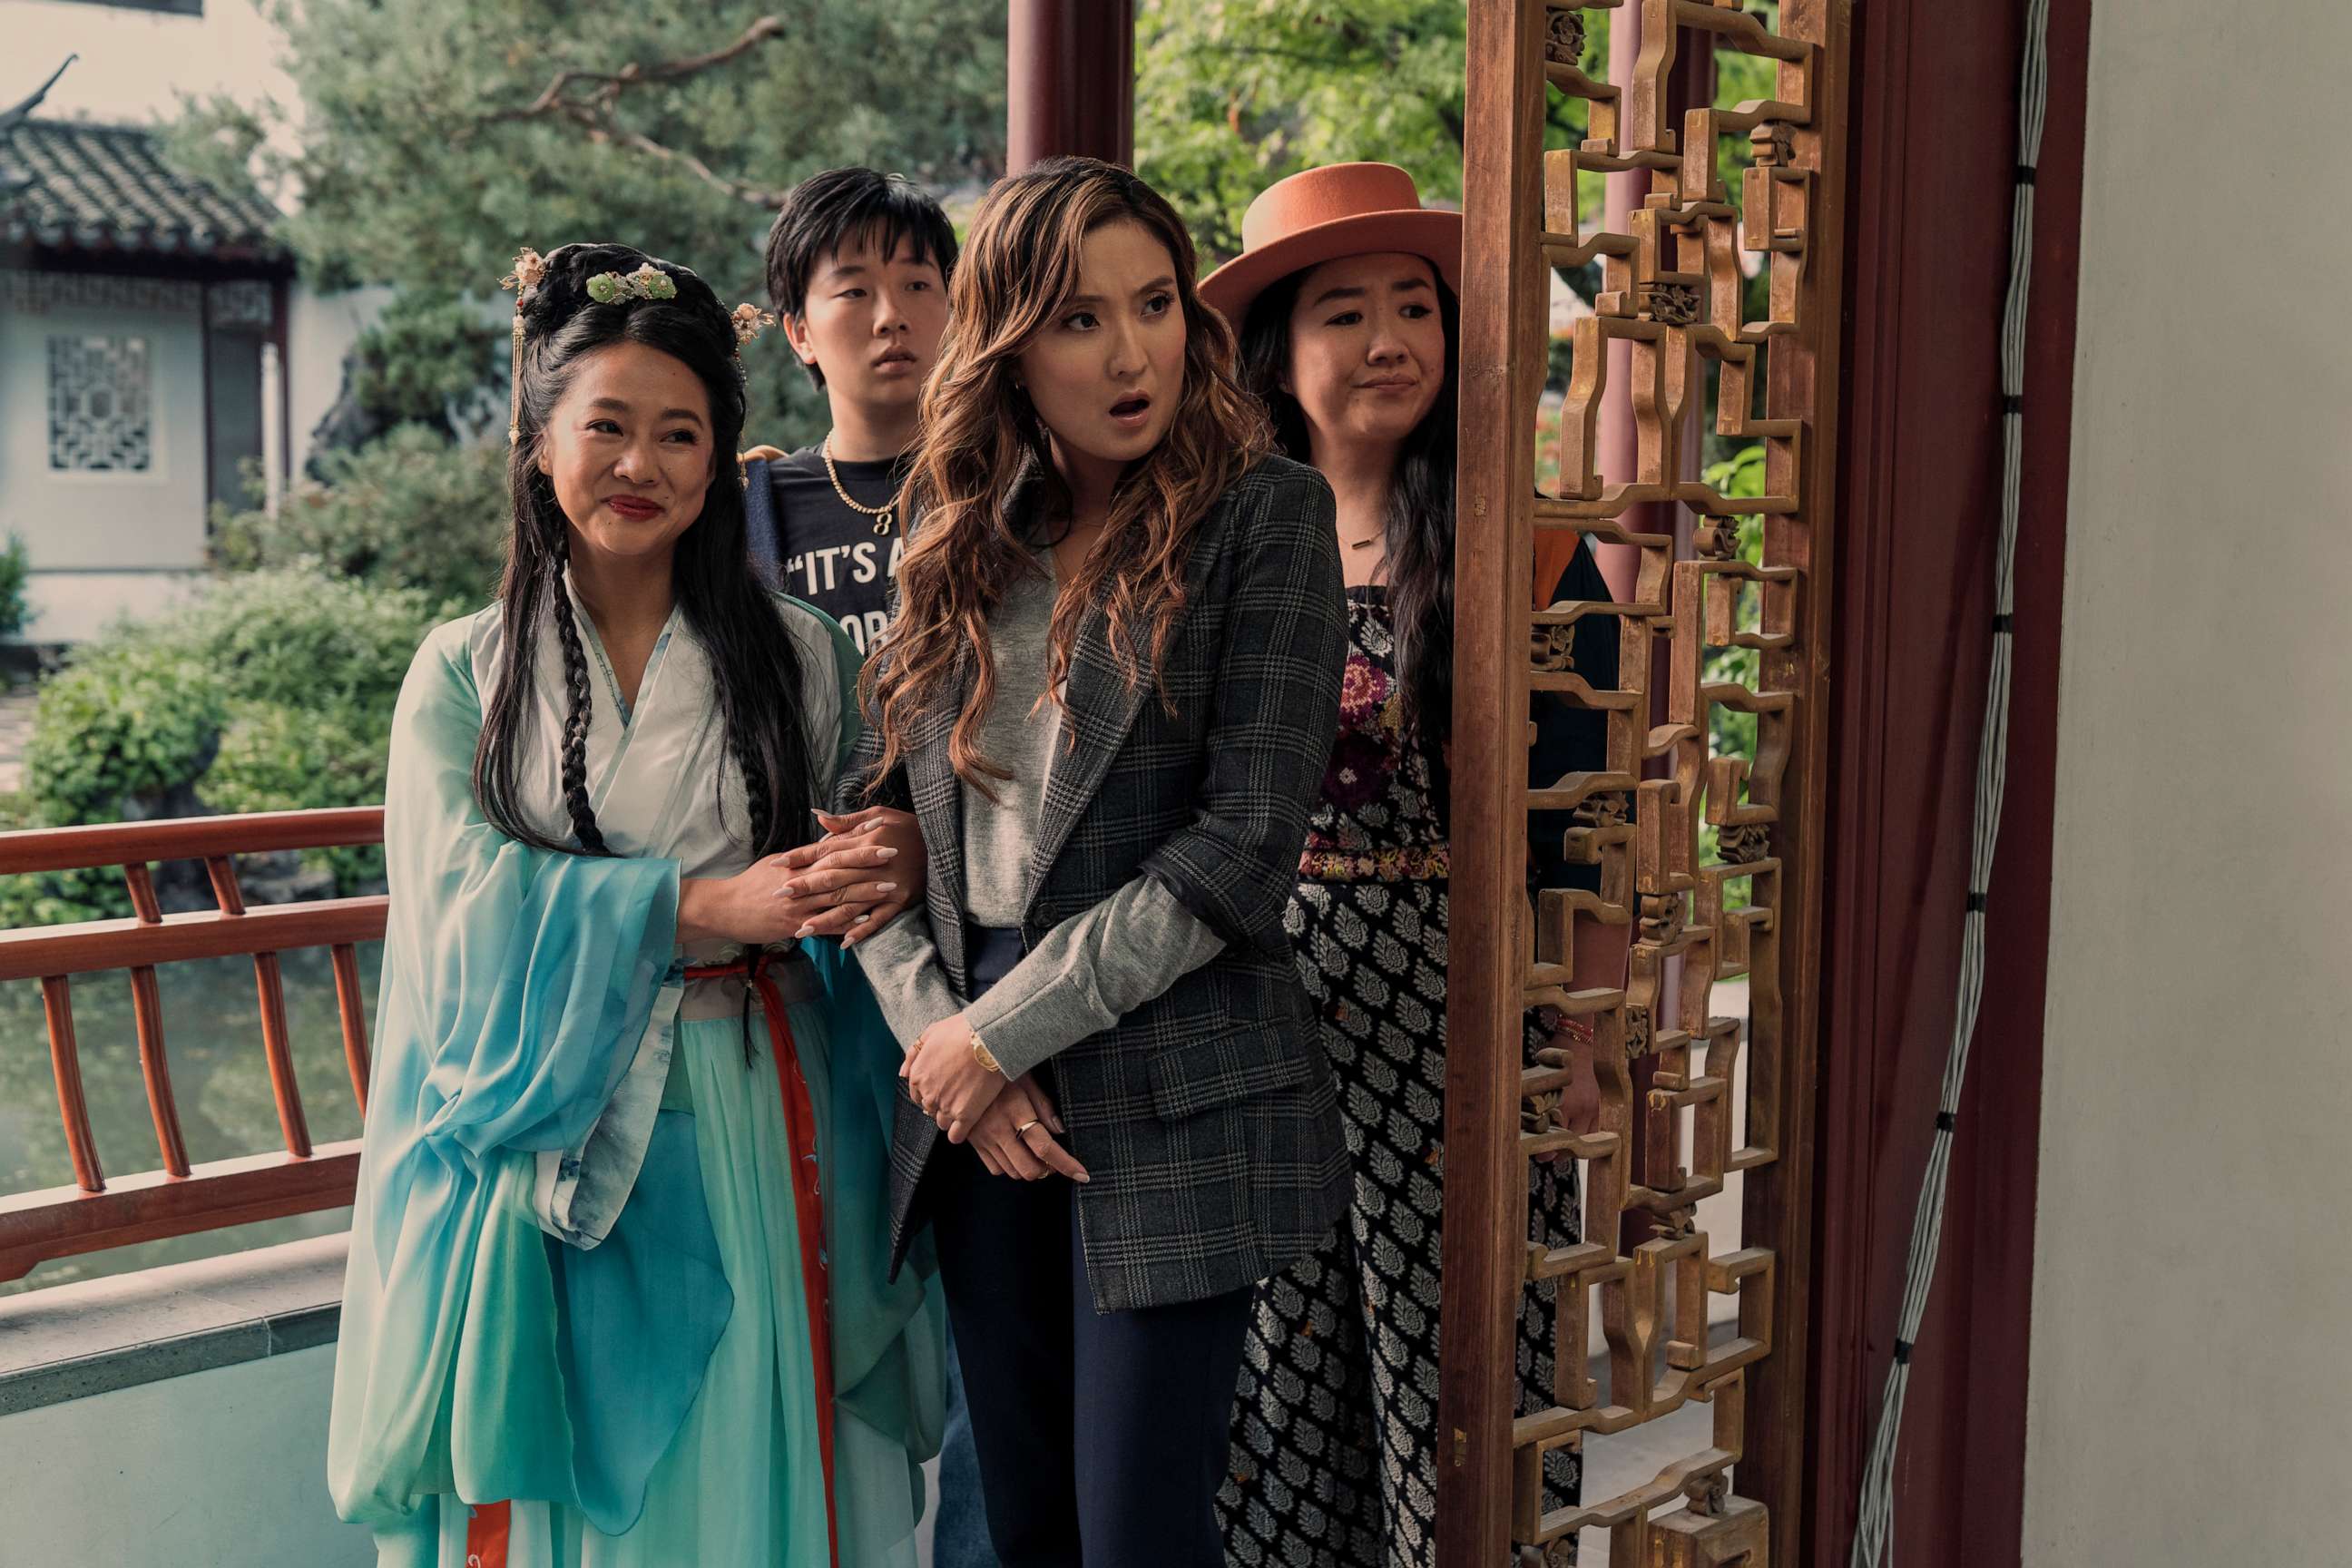 PHOTO: Stephanie Hsu as Kat, Sabrina Wu as Deadeye, Ashley Park as Audrey, and Sherry Cola as Lolo in "Joy Ride."